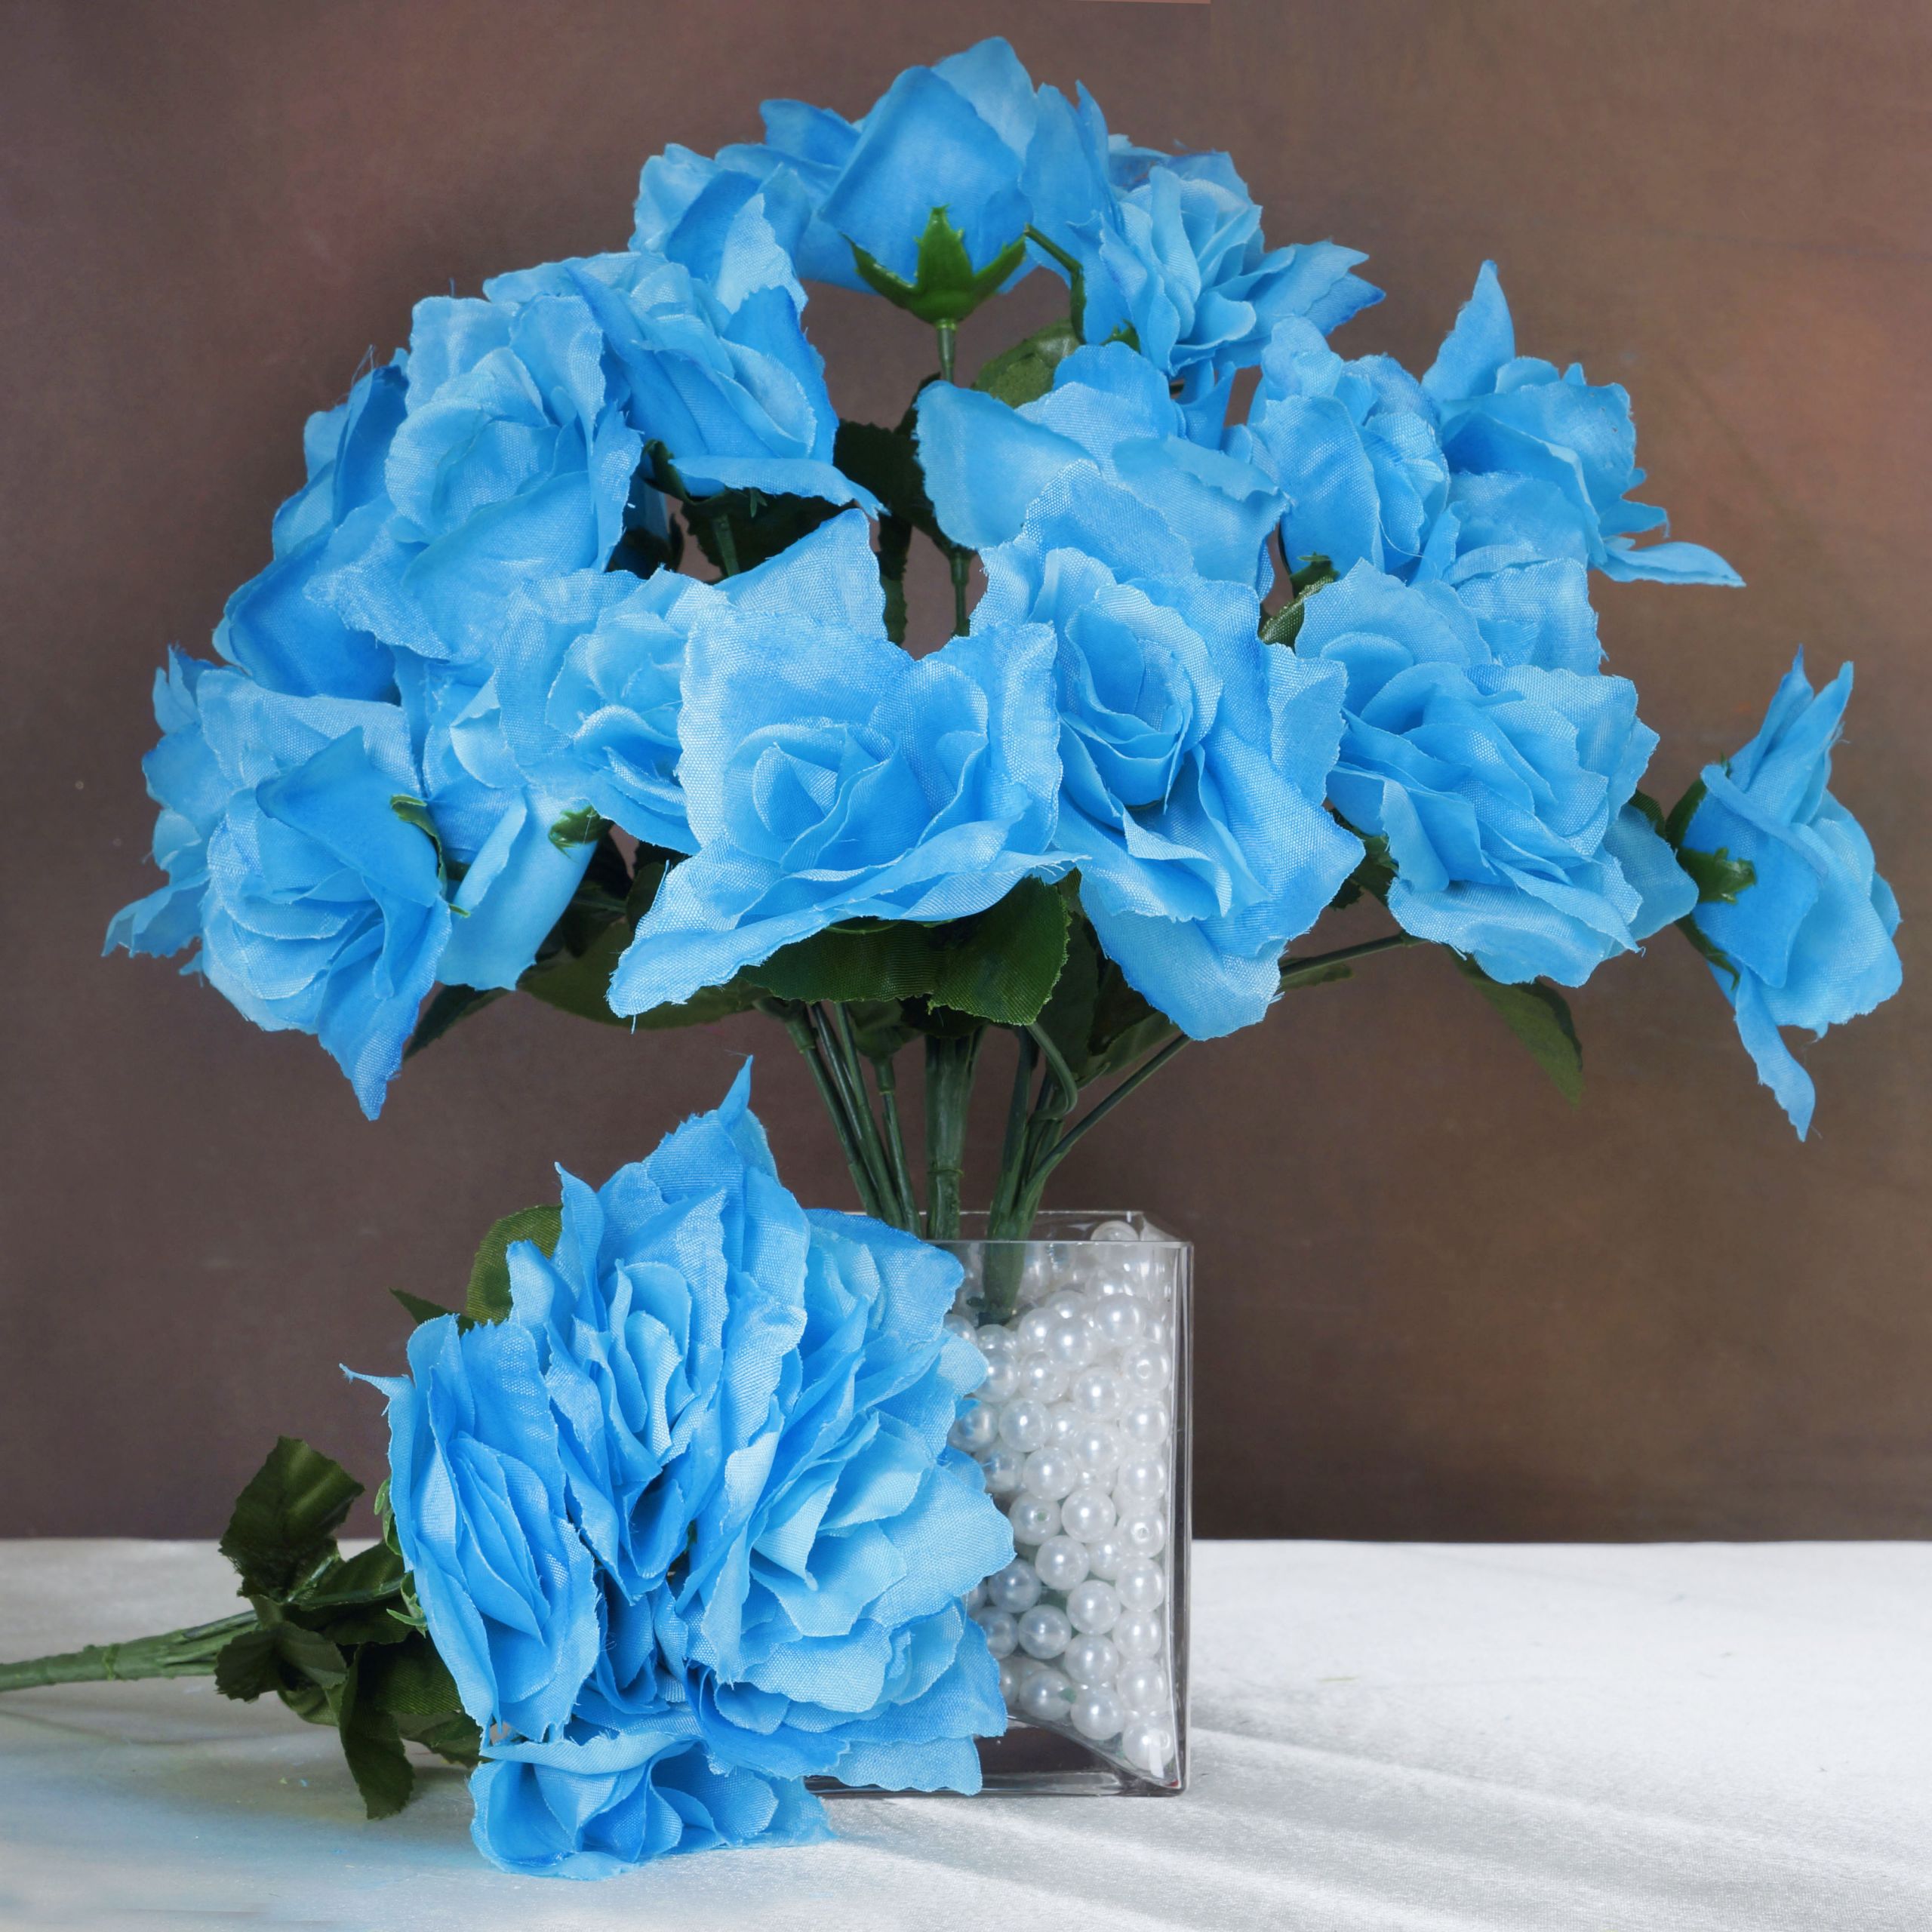 Cheap Wholesale Wedding Flowers
 252 OPEN ROSES Wedding Wholesale Discount SILK Flowers